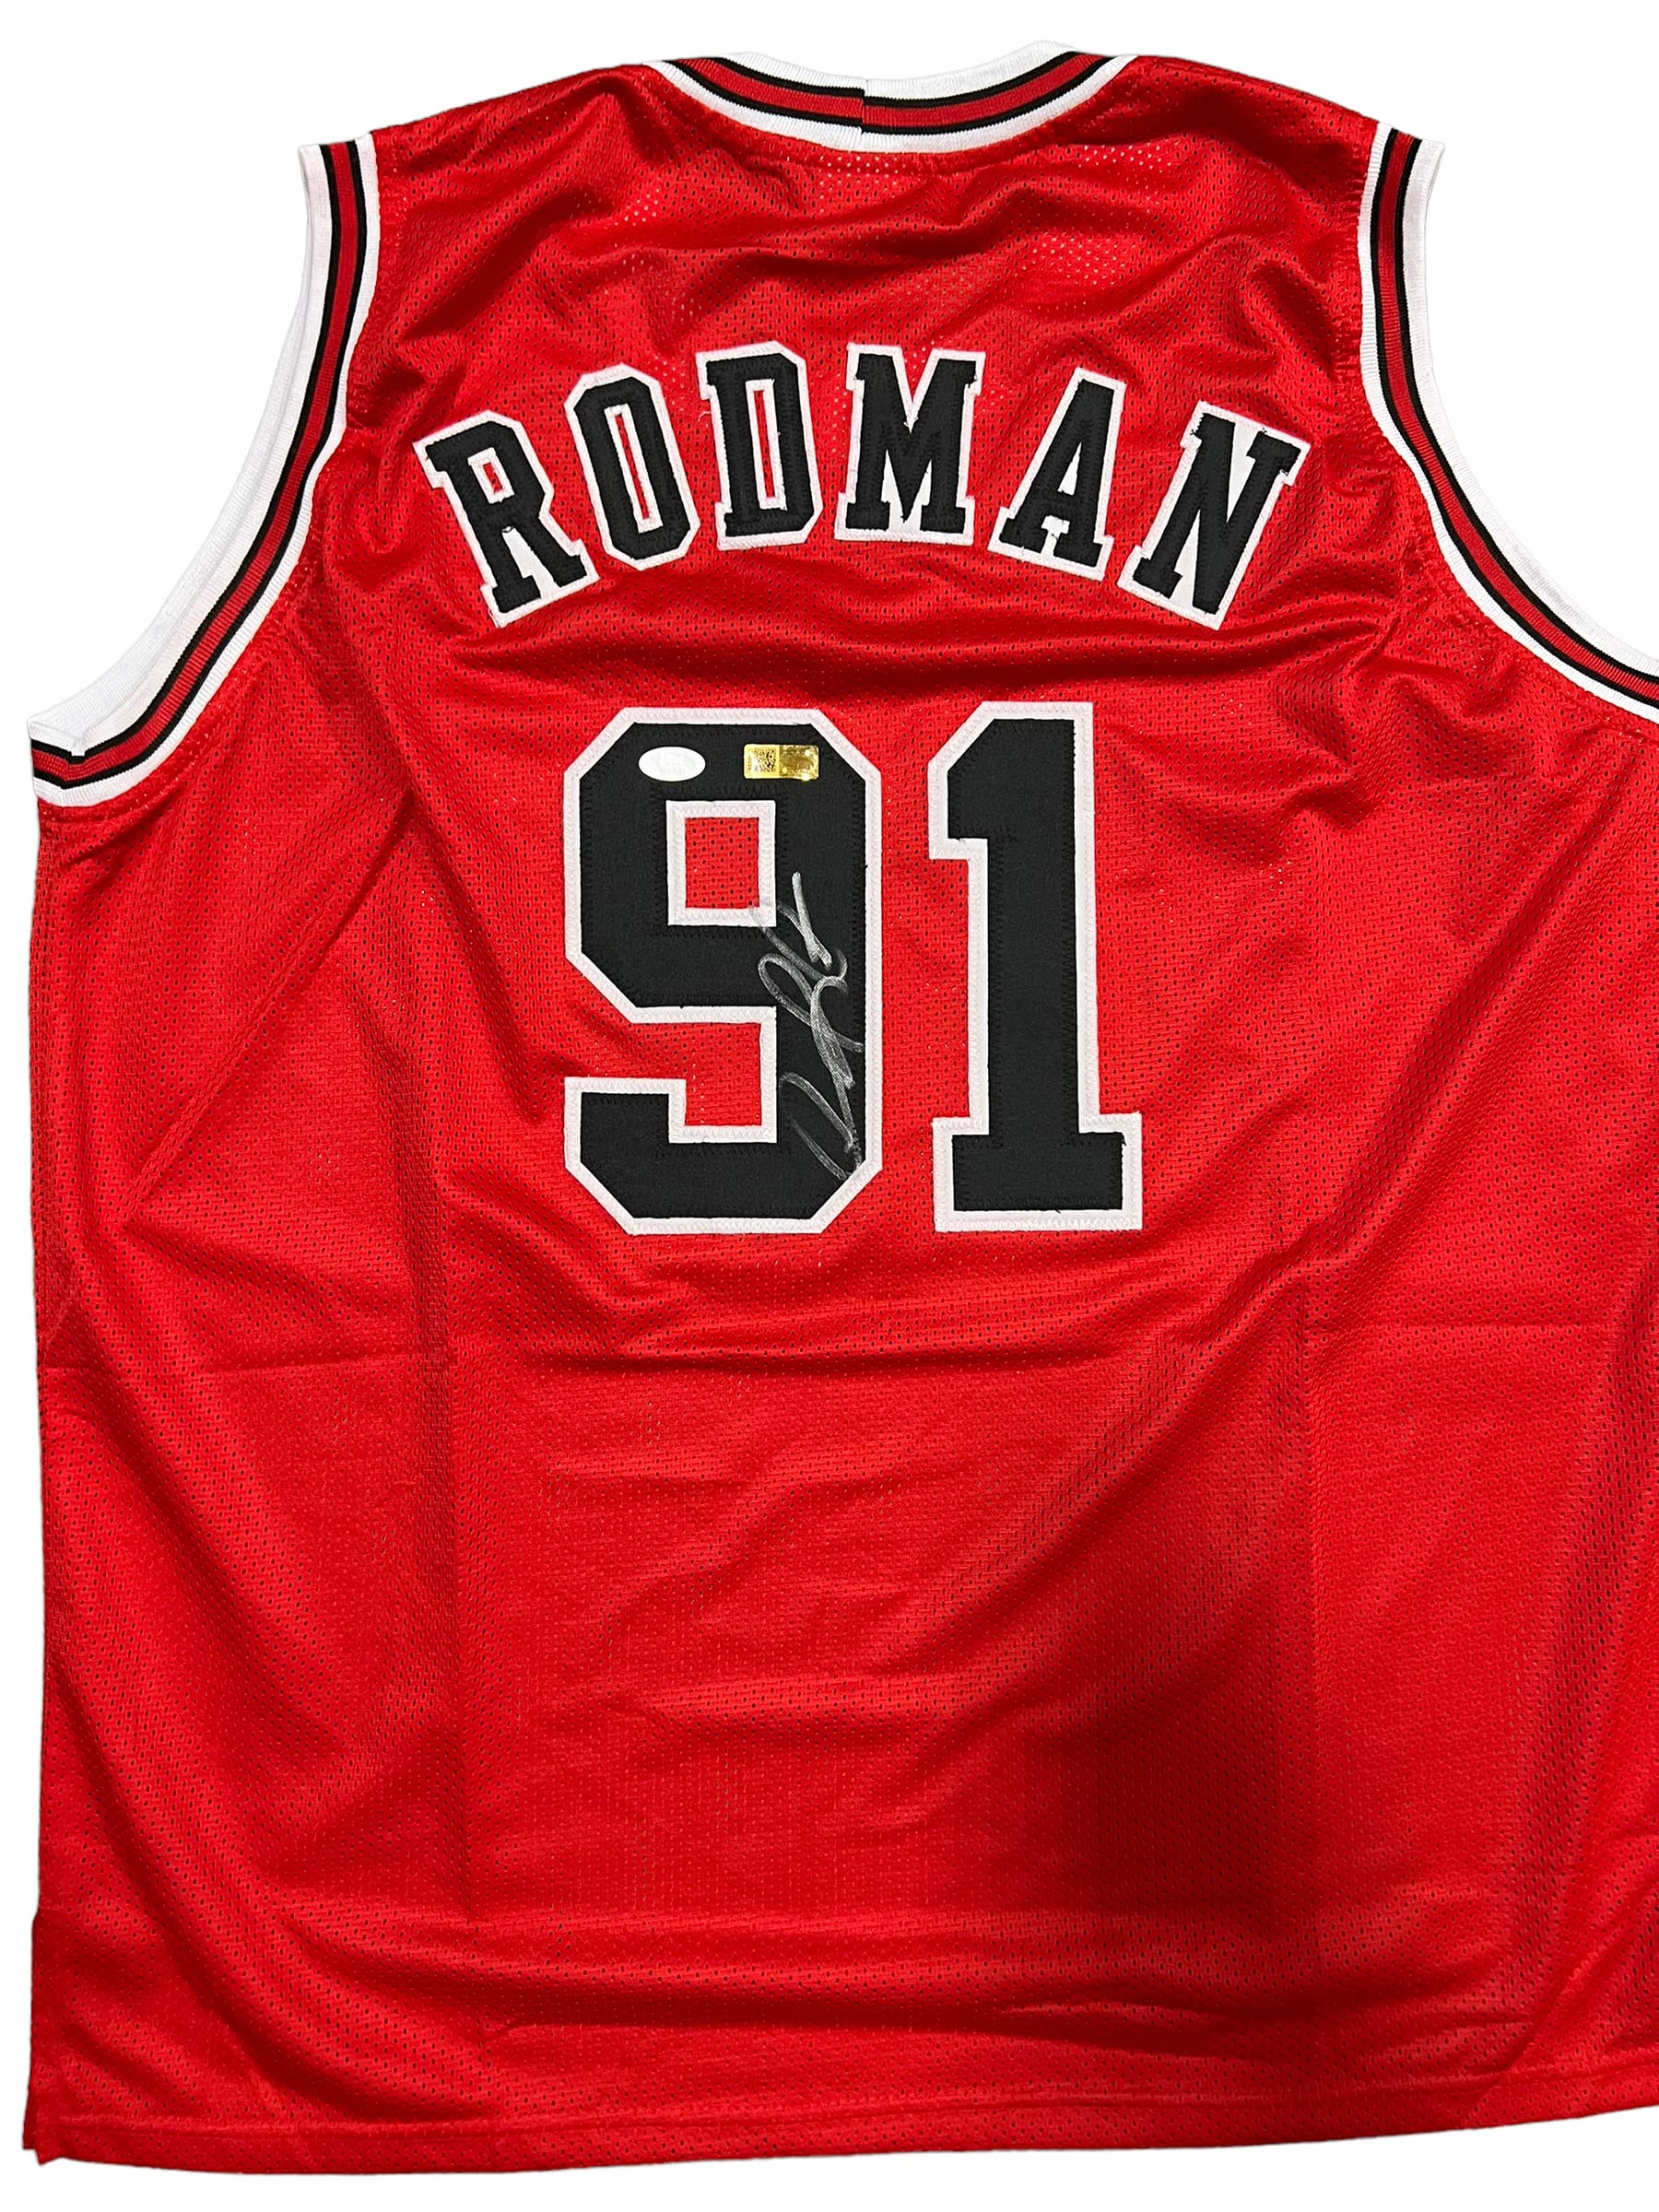 Dennis Rodman Chicago Bulls Autographed Mitchell & Ness Red